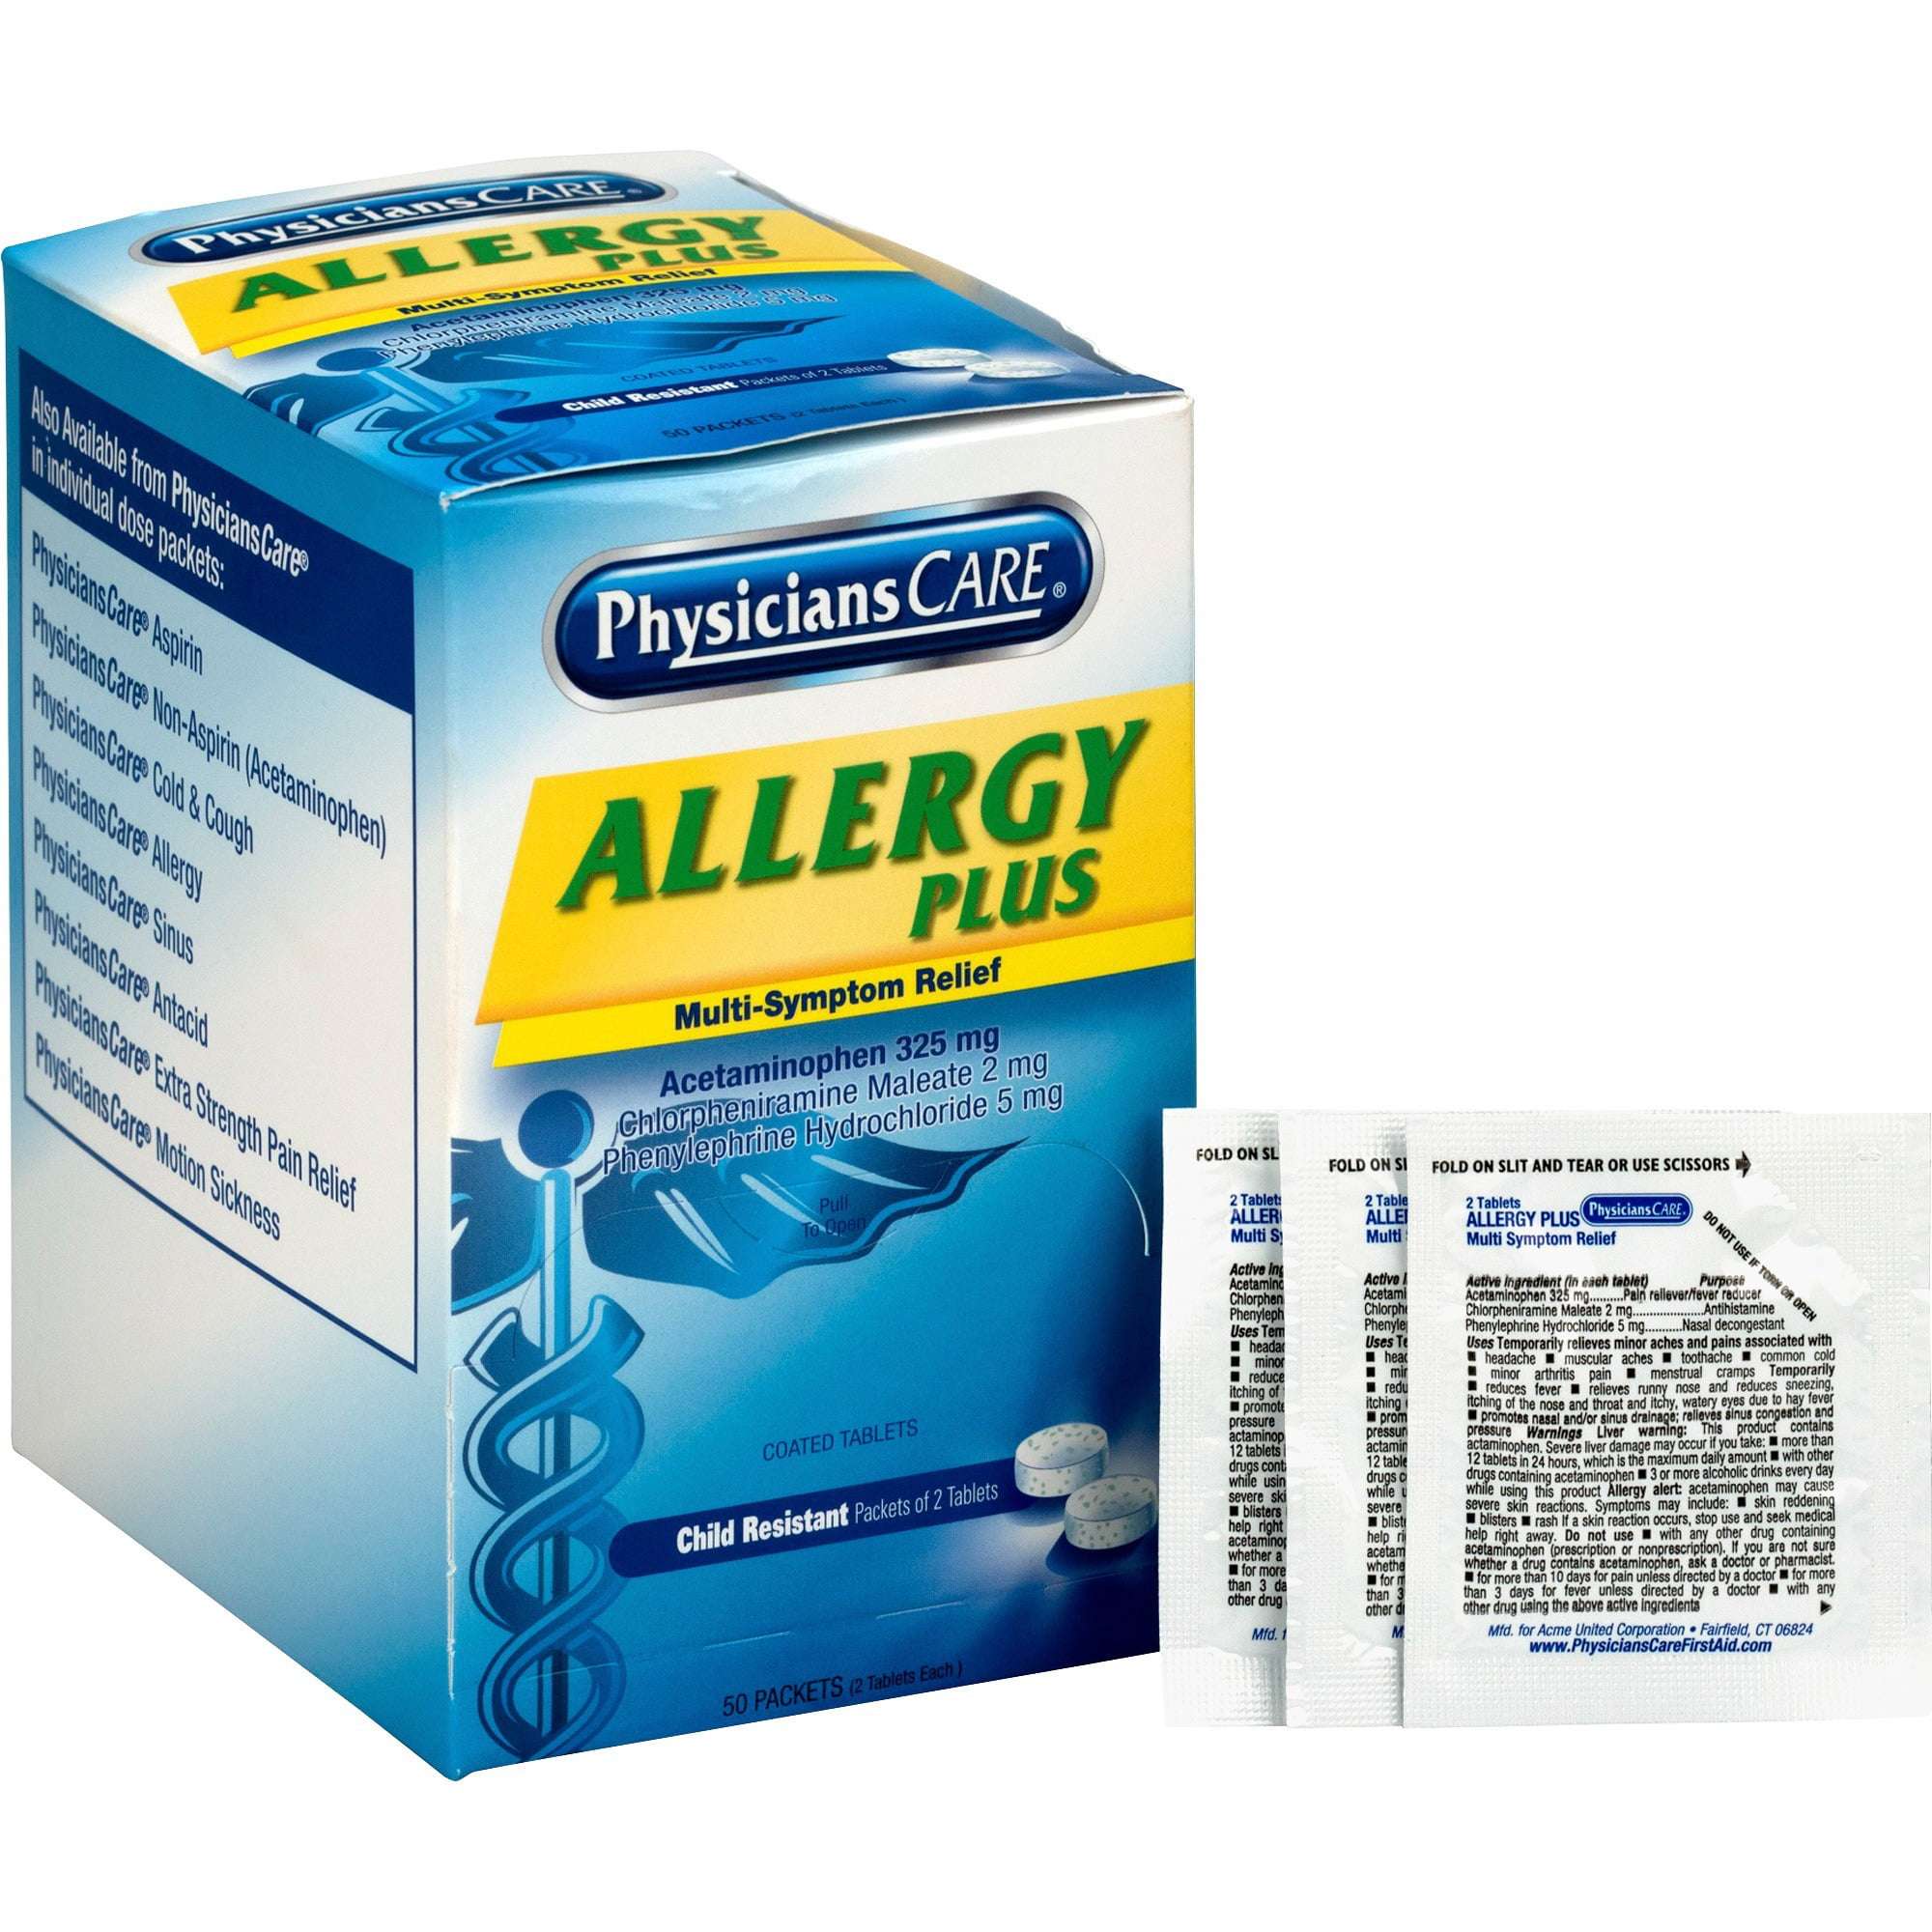 PhysiciansCare, ACM90091, Allergy Plus Medication, 50 / Box